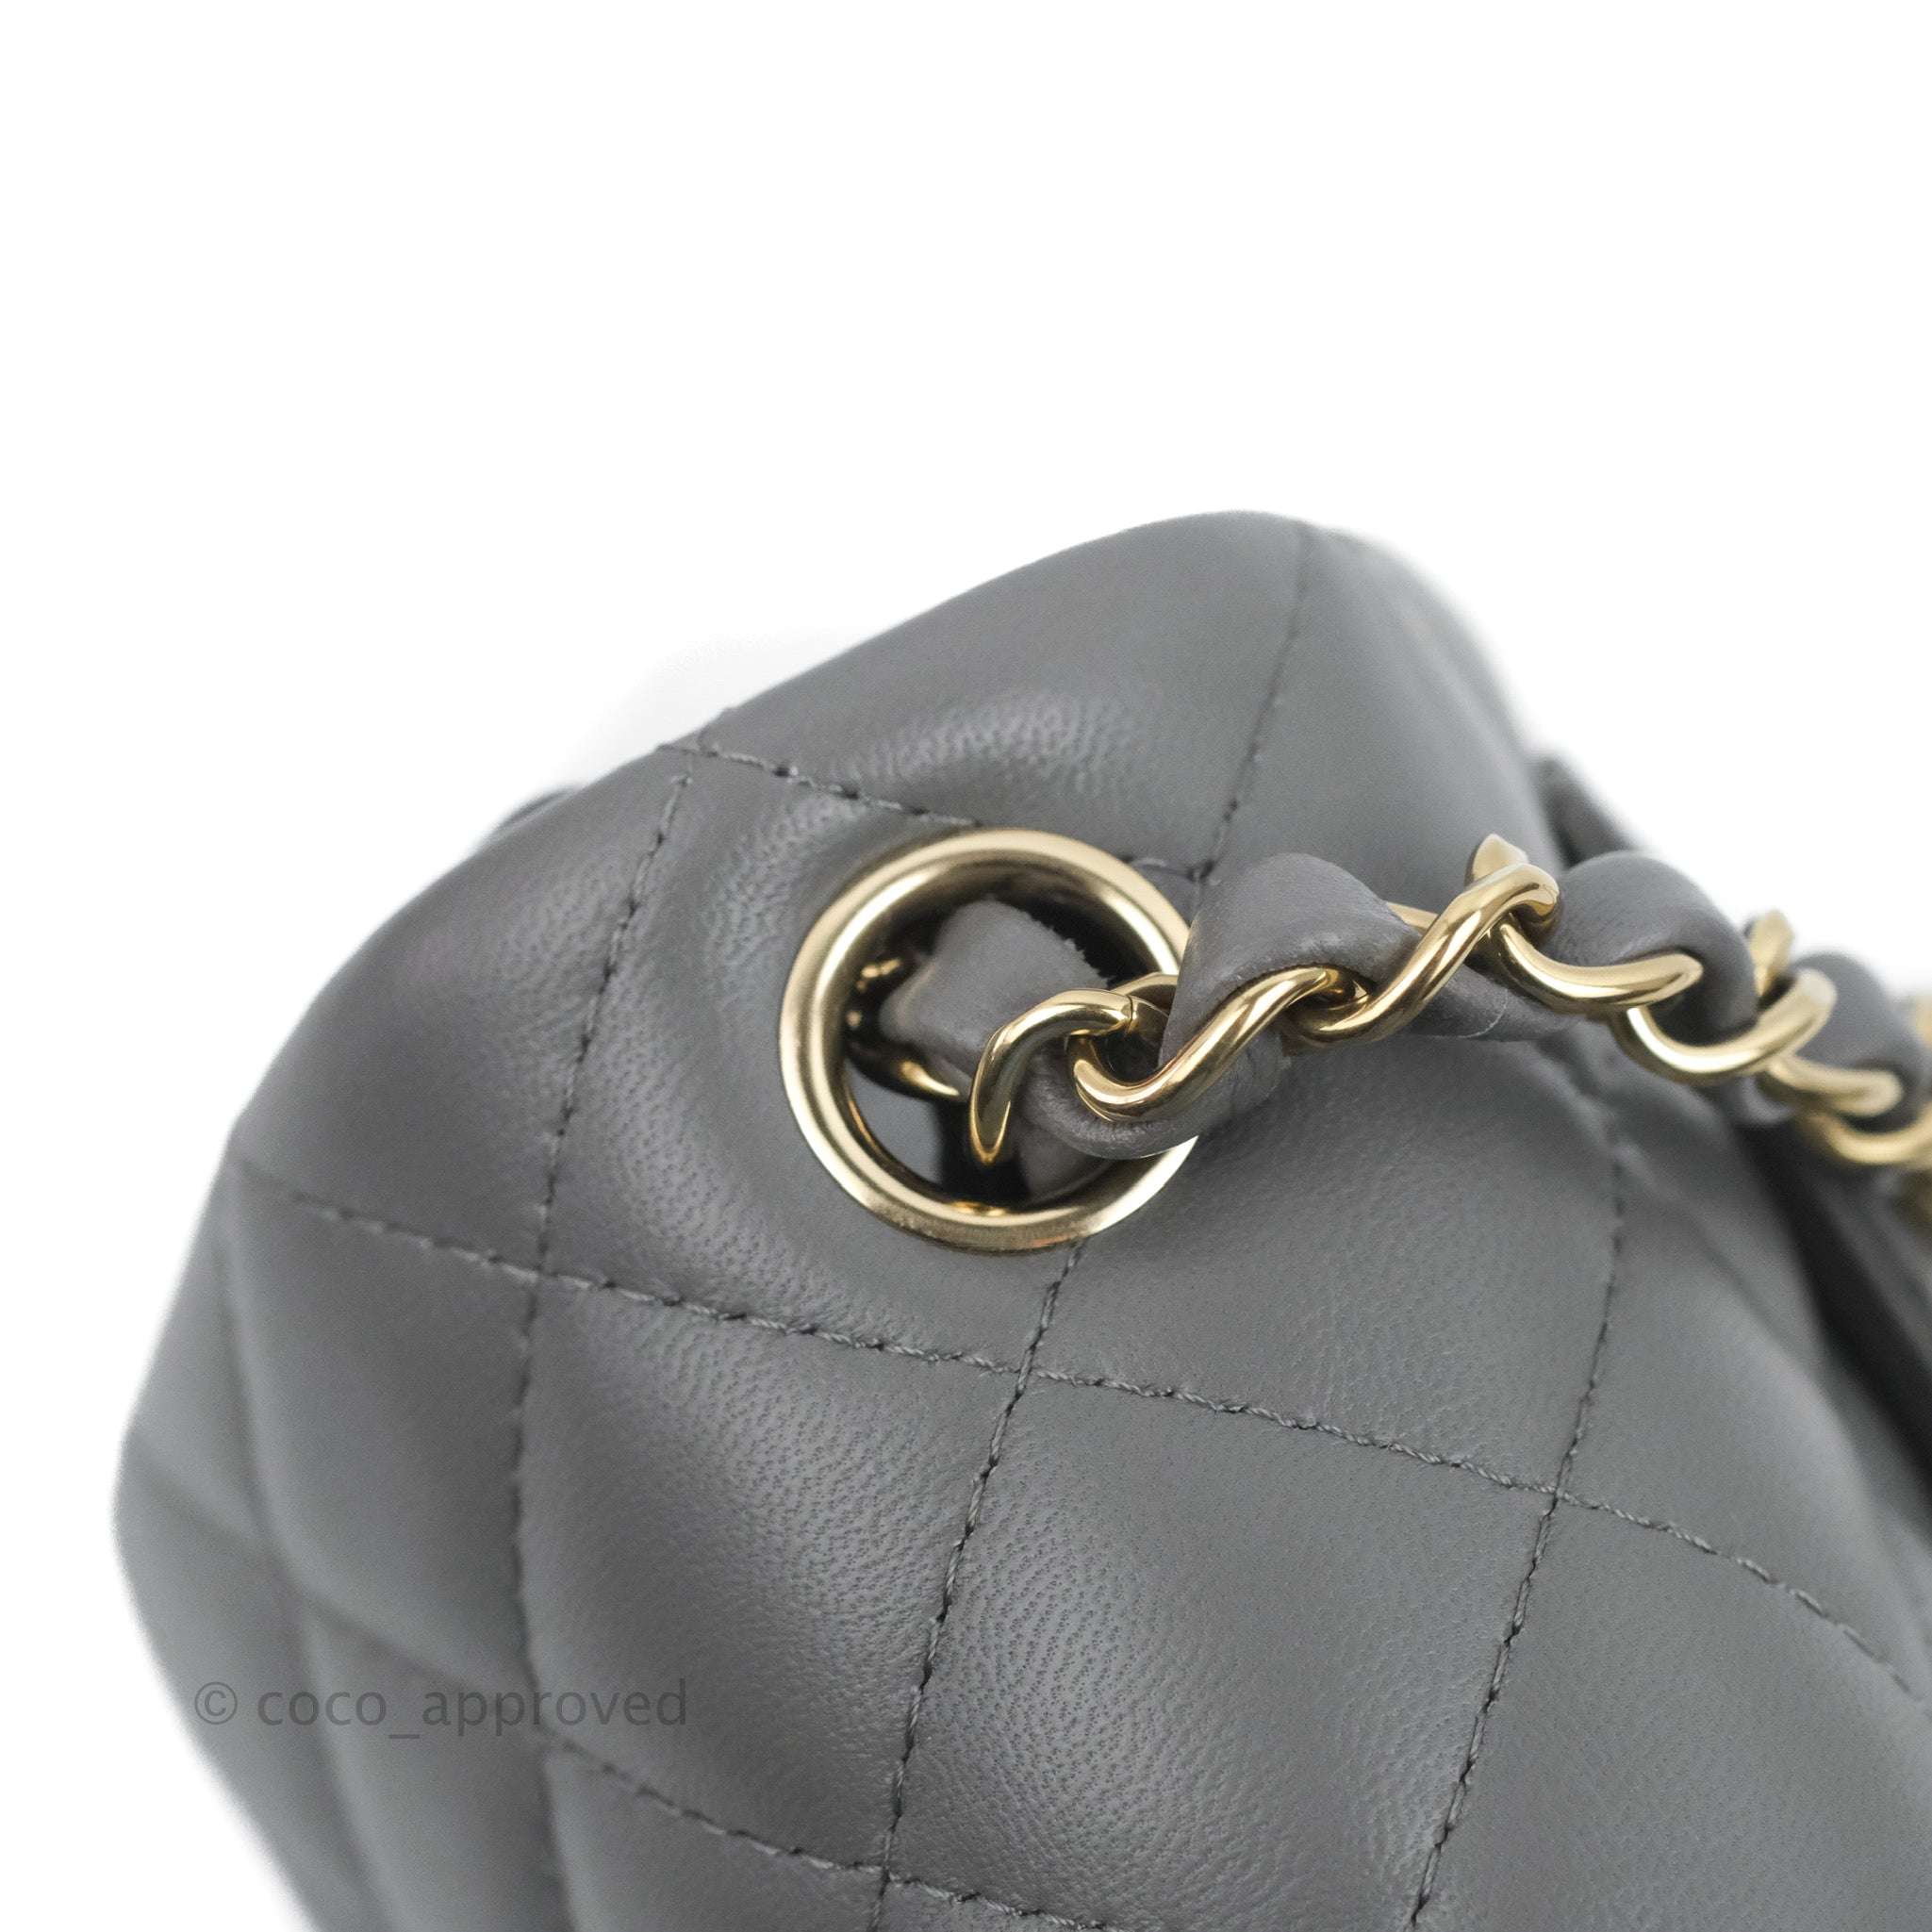 Chanel Chanel 22 Small Tote Handbag in 22A Grey Calfskin | Dearluxe